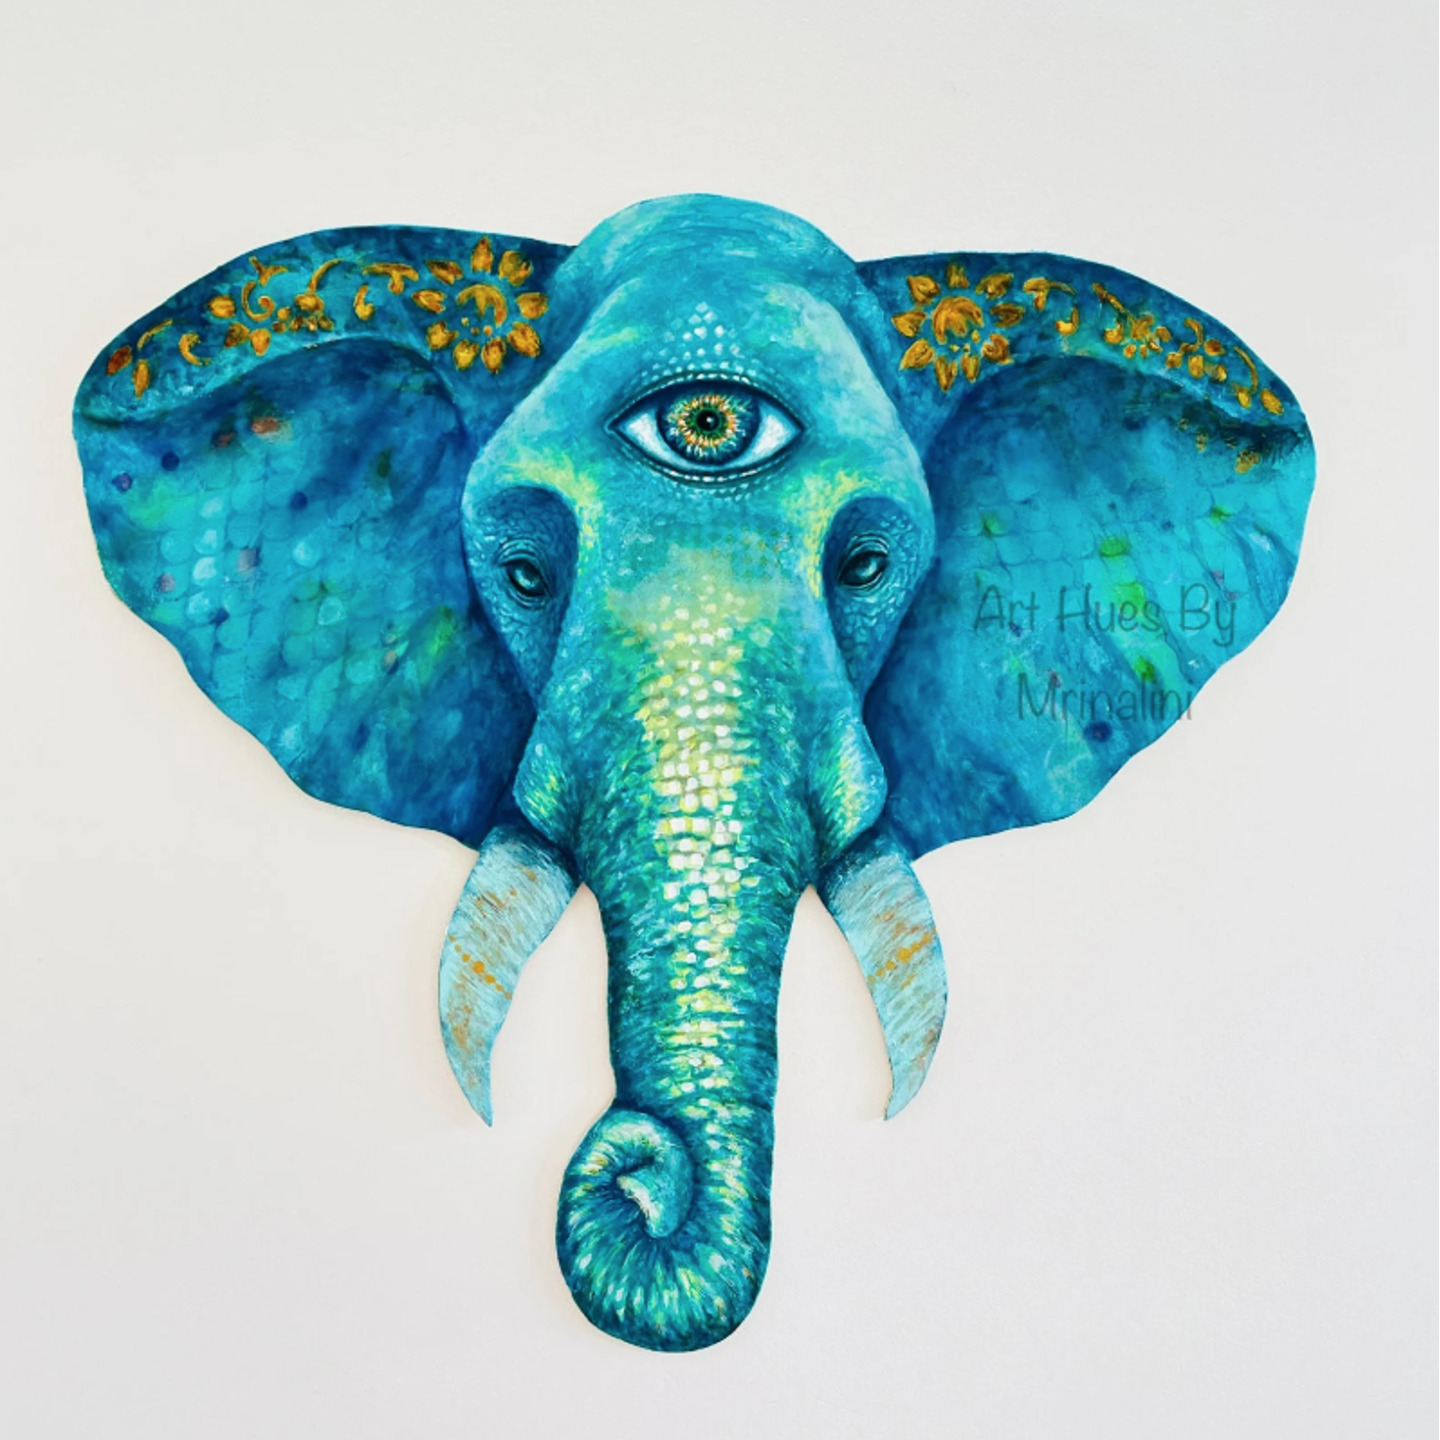 Contemporary Elephant Wall decor, Abstract fantasy elephant, original elephant painting, spiritual animal wood art, modern evil eye decor